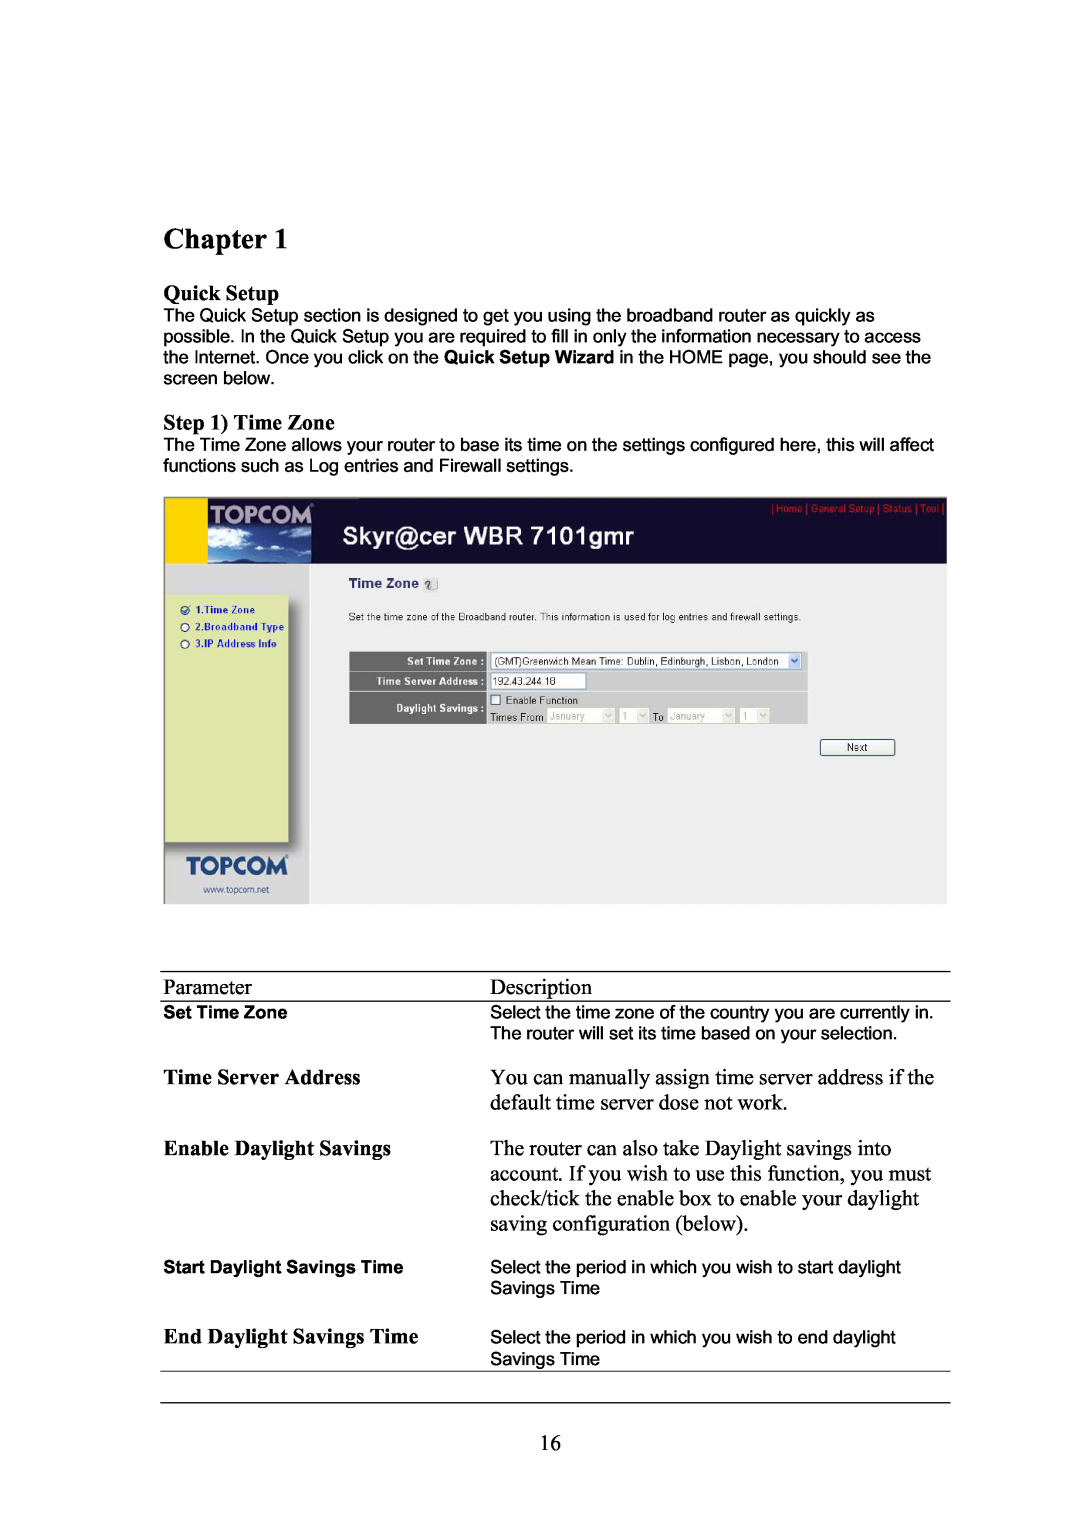 Topcom WBR 7101GMR manual Chapter, Set Time Zone, Start Daylight Savings Time 